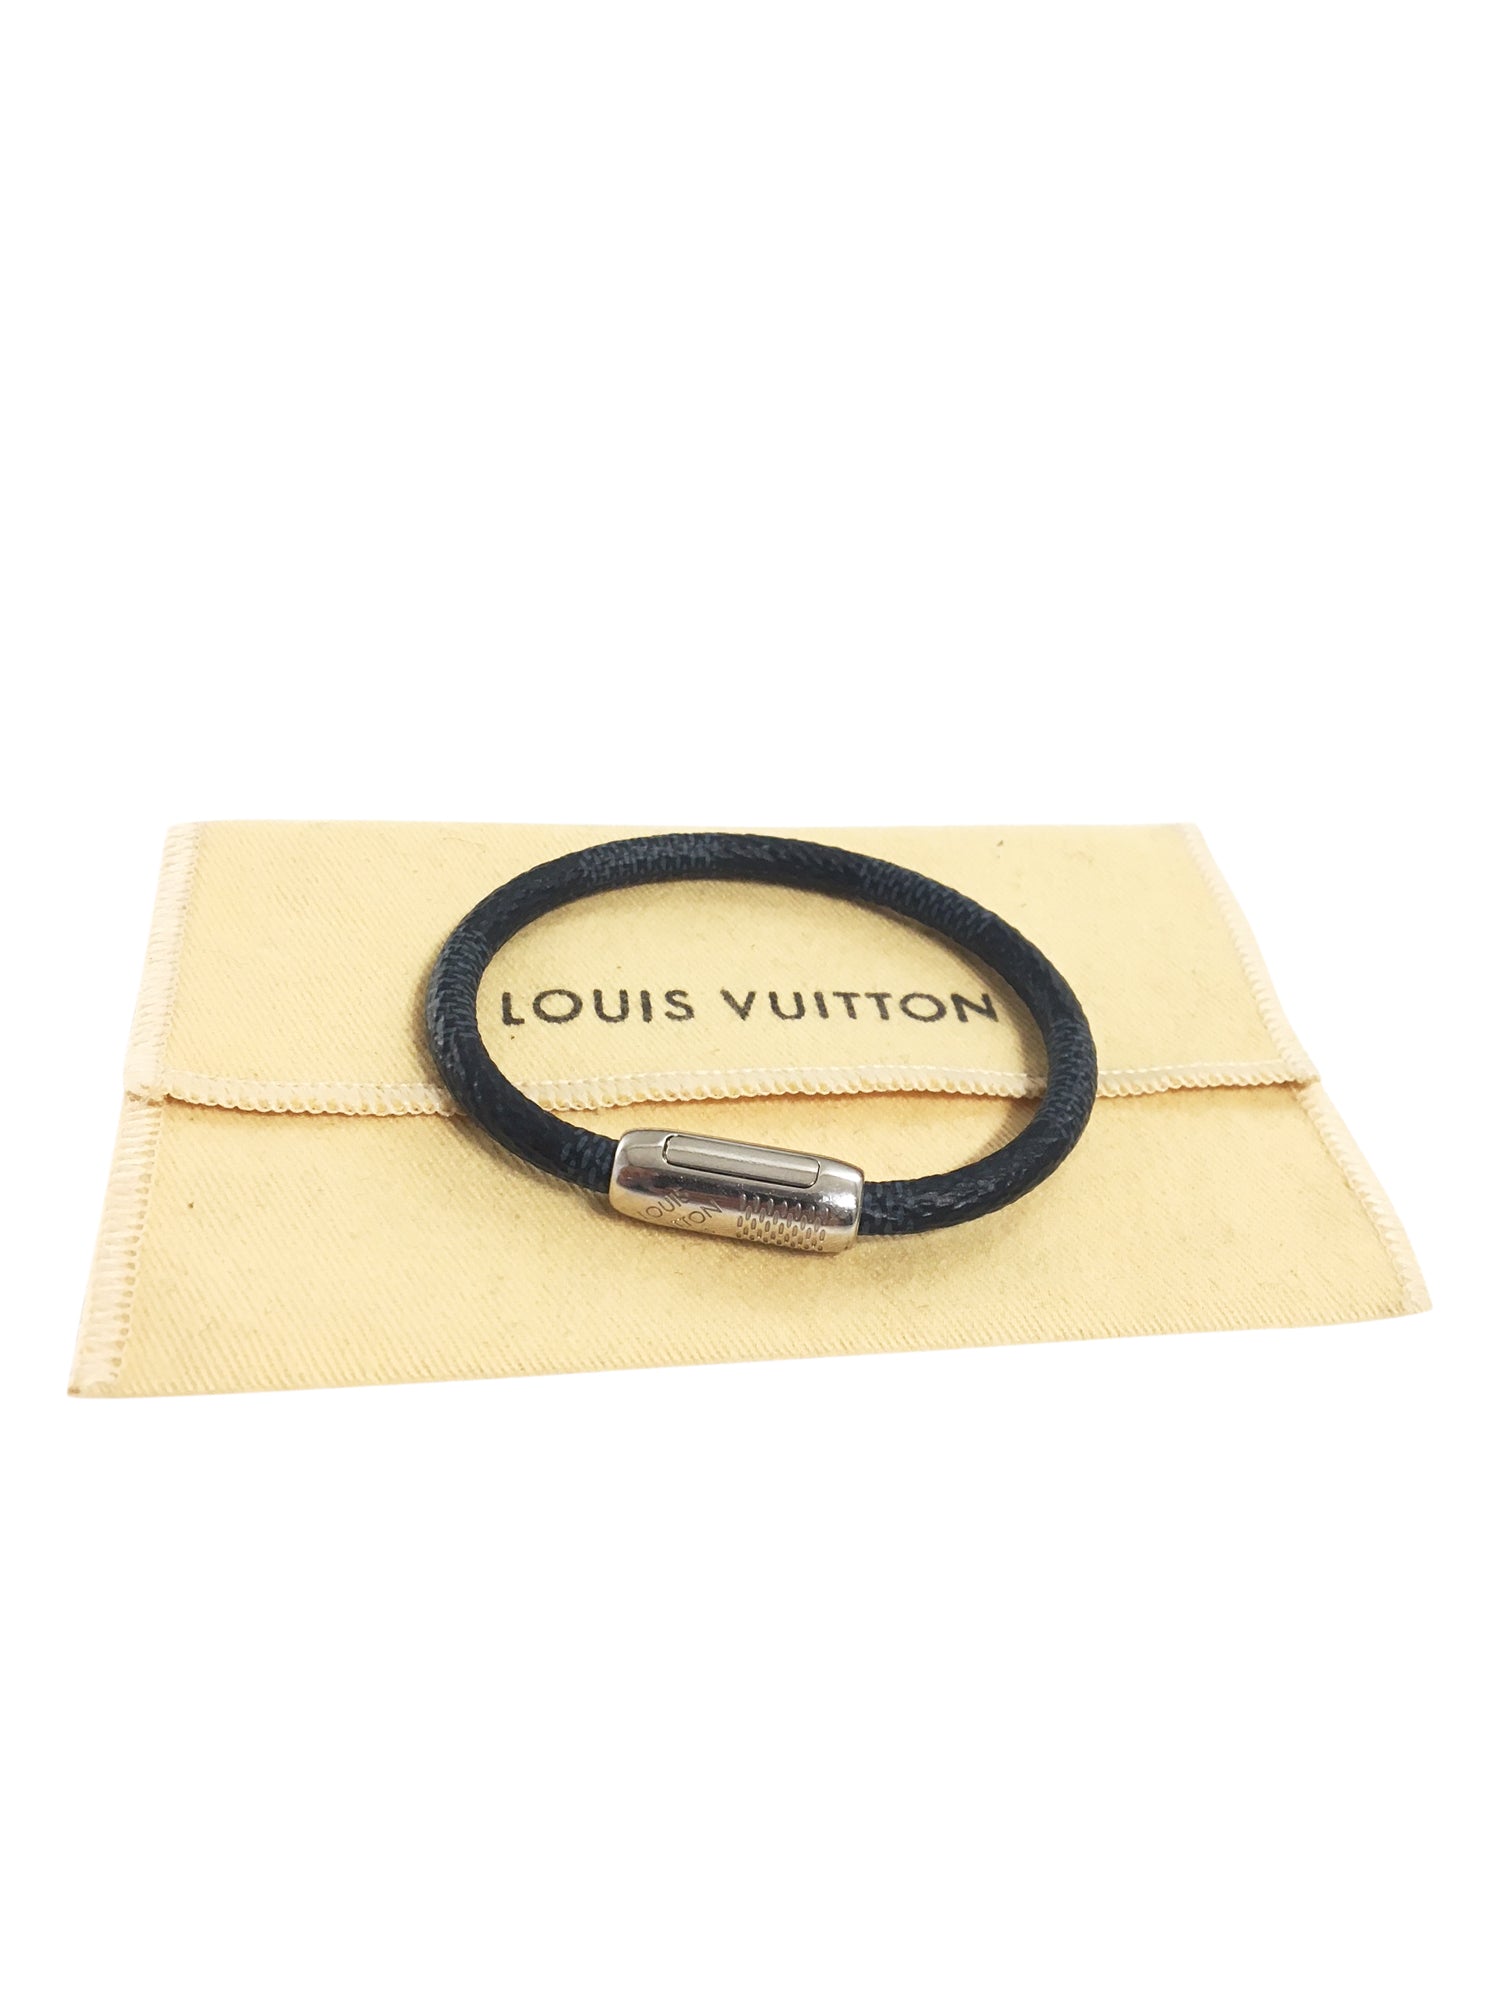 Louis Vuitton AUTHENTIC Keep It Bracelet - jewelry - by owner - sale -  craigslist